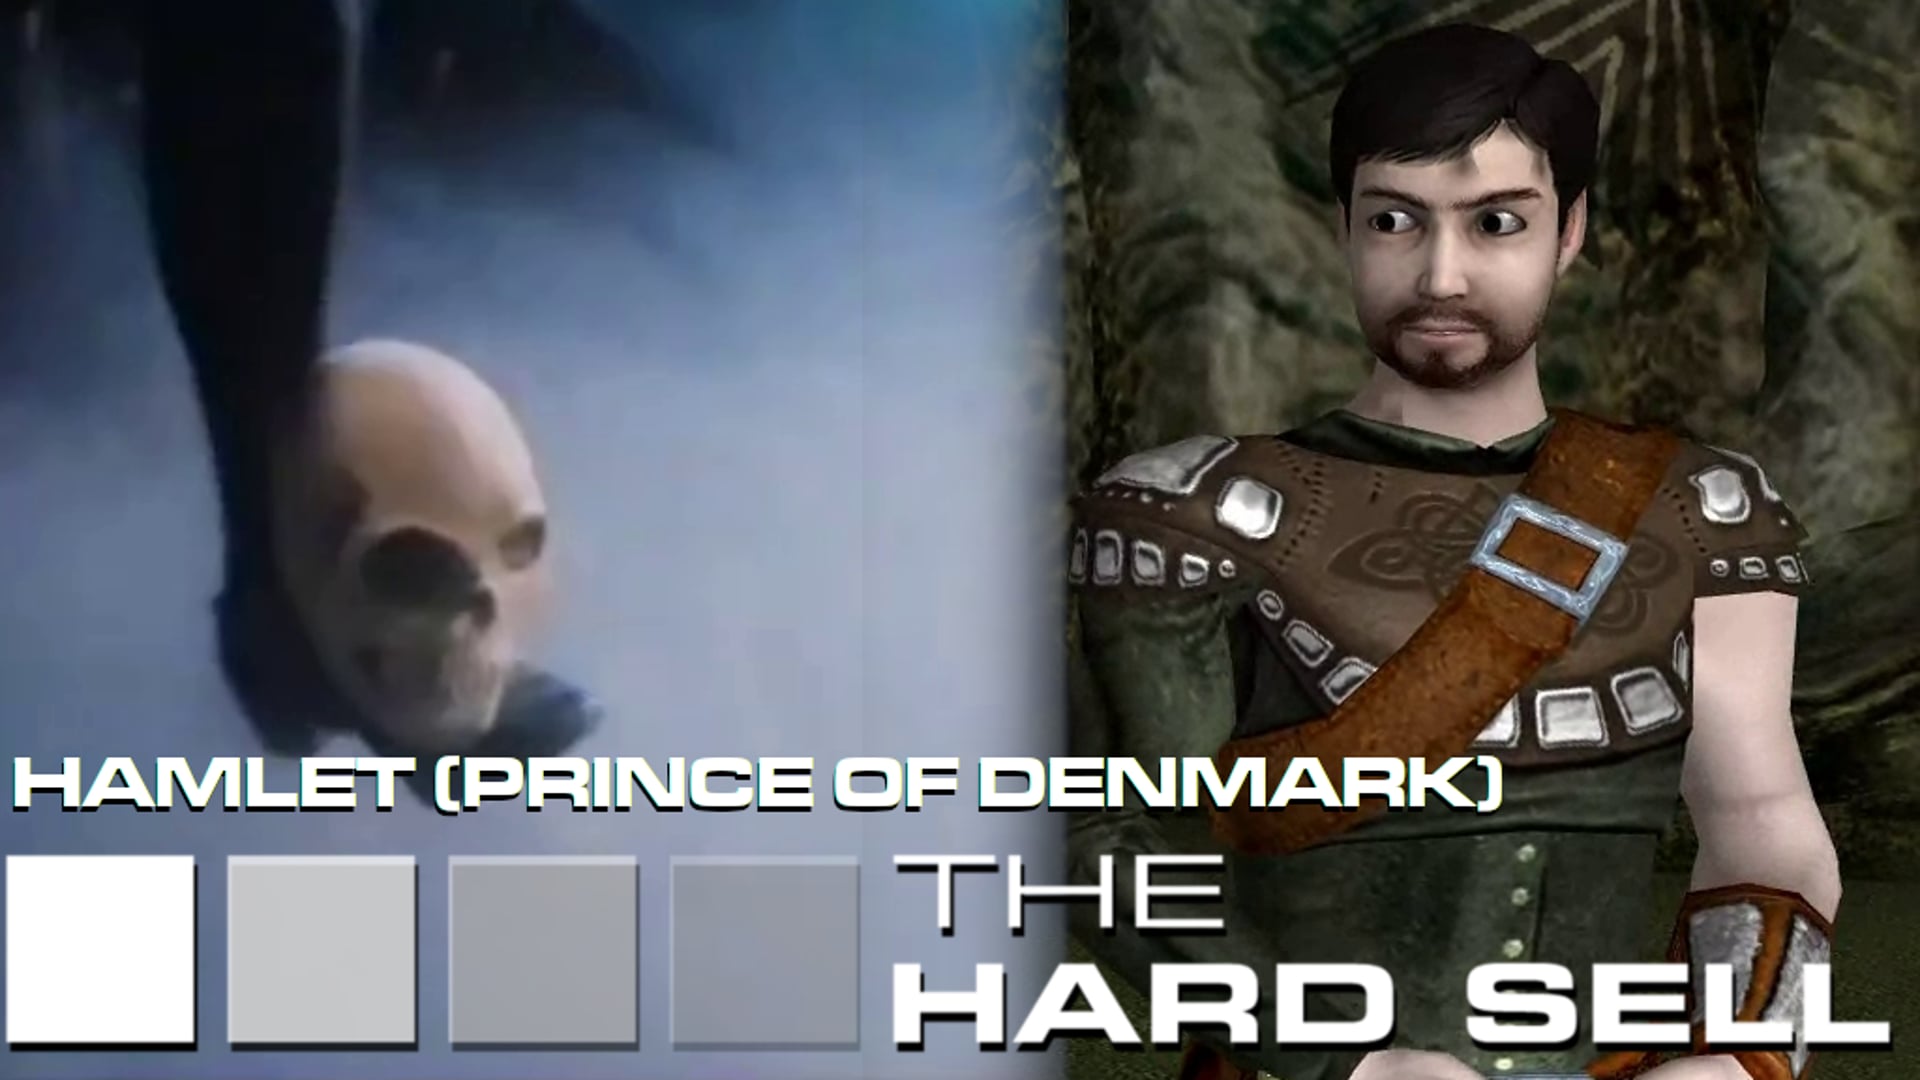 The Hard Sell #170: Hamlet (Prince of Denmark)